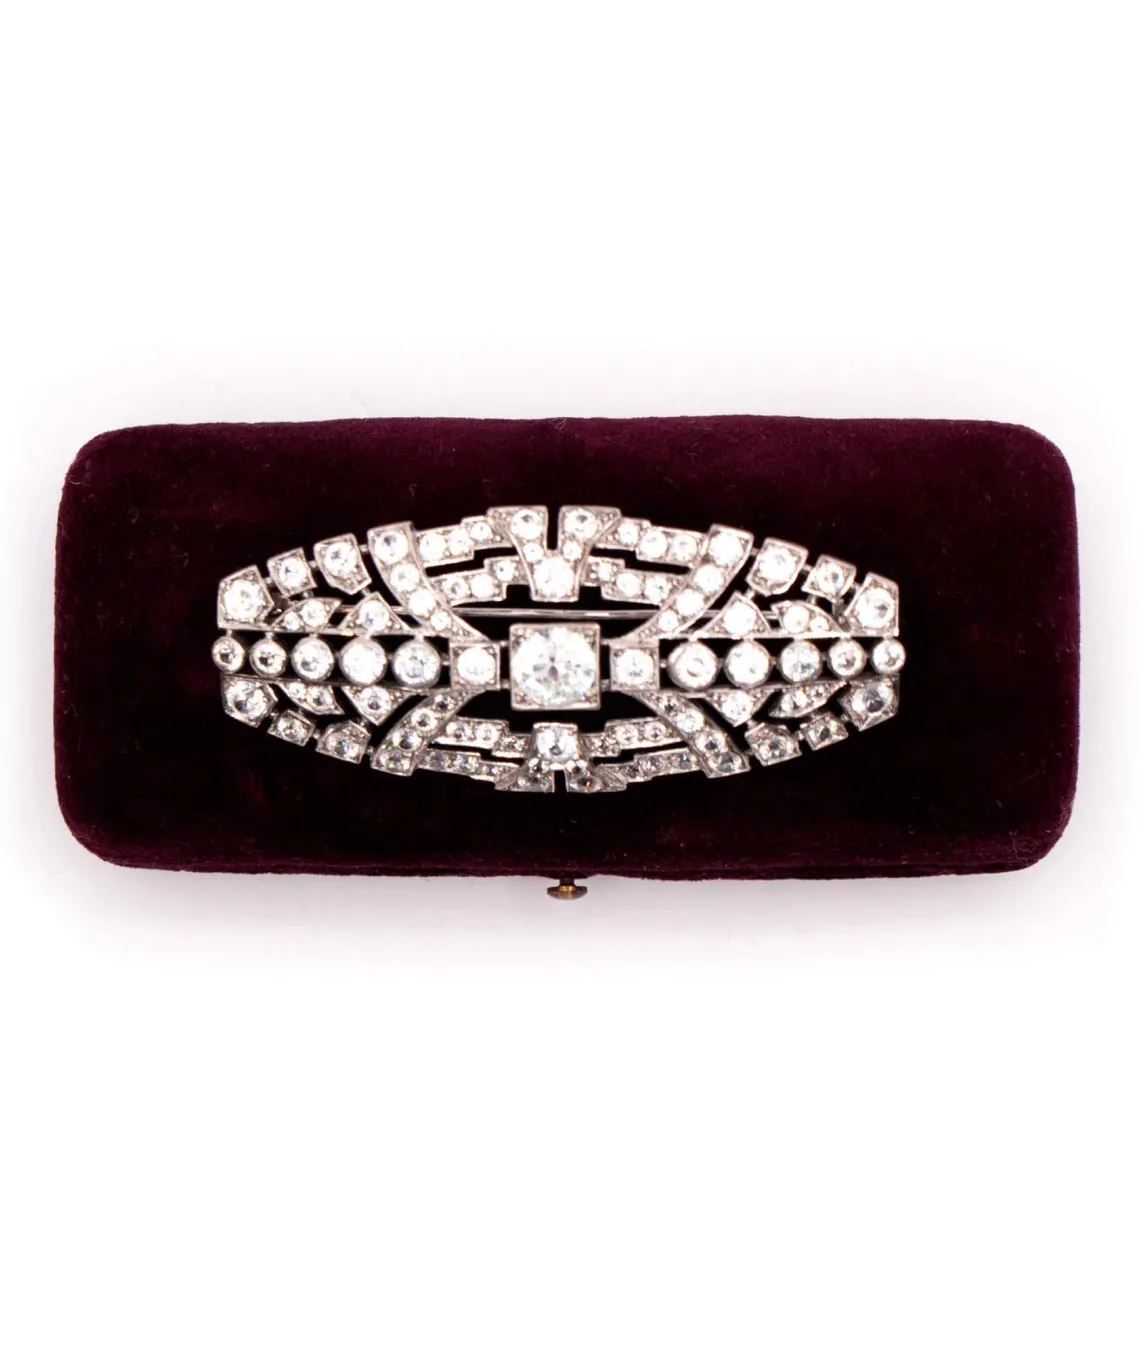 Art Deco brooch set with zircons on burgundy velvet box